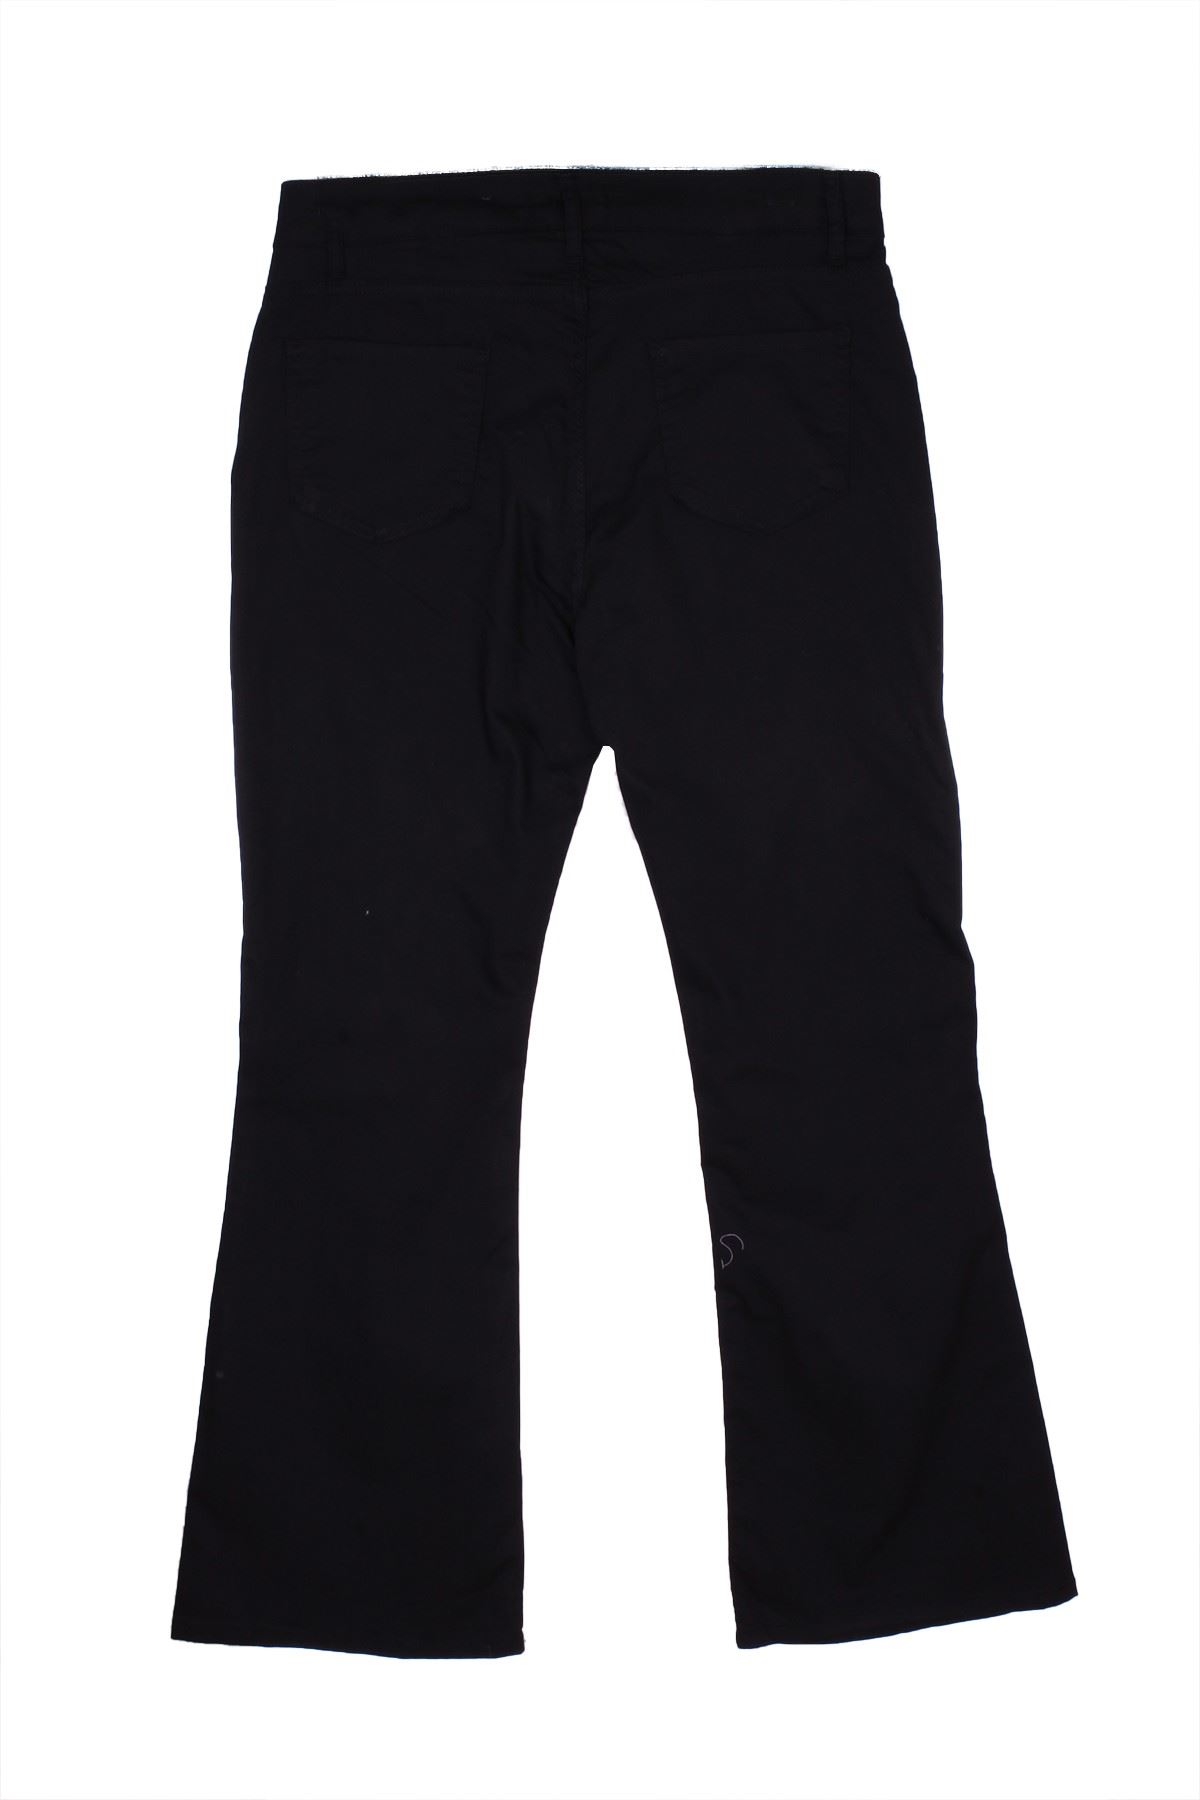 Giyinsen Kadın Siyah Kanvas Pantolon - 23KR27001553